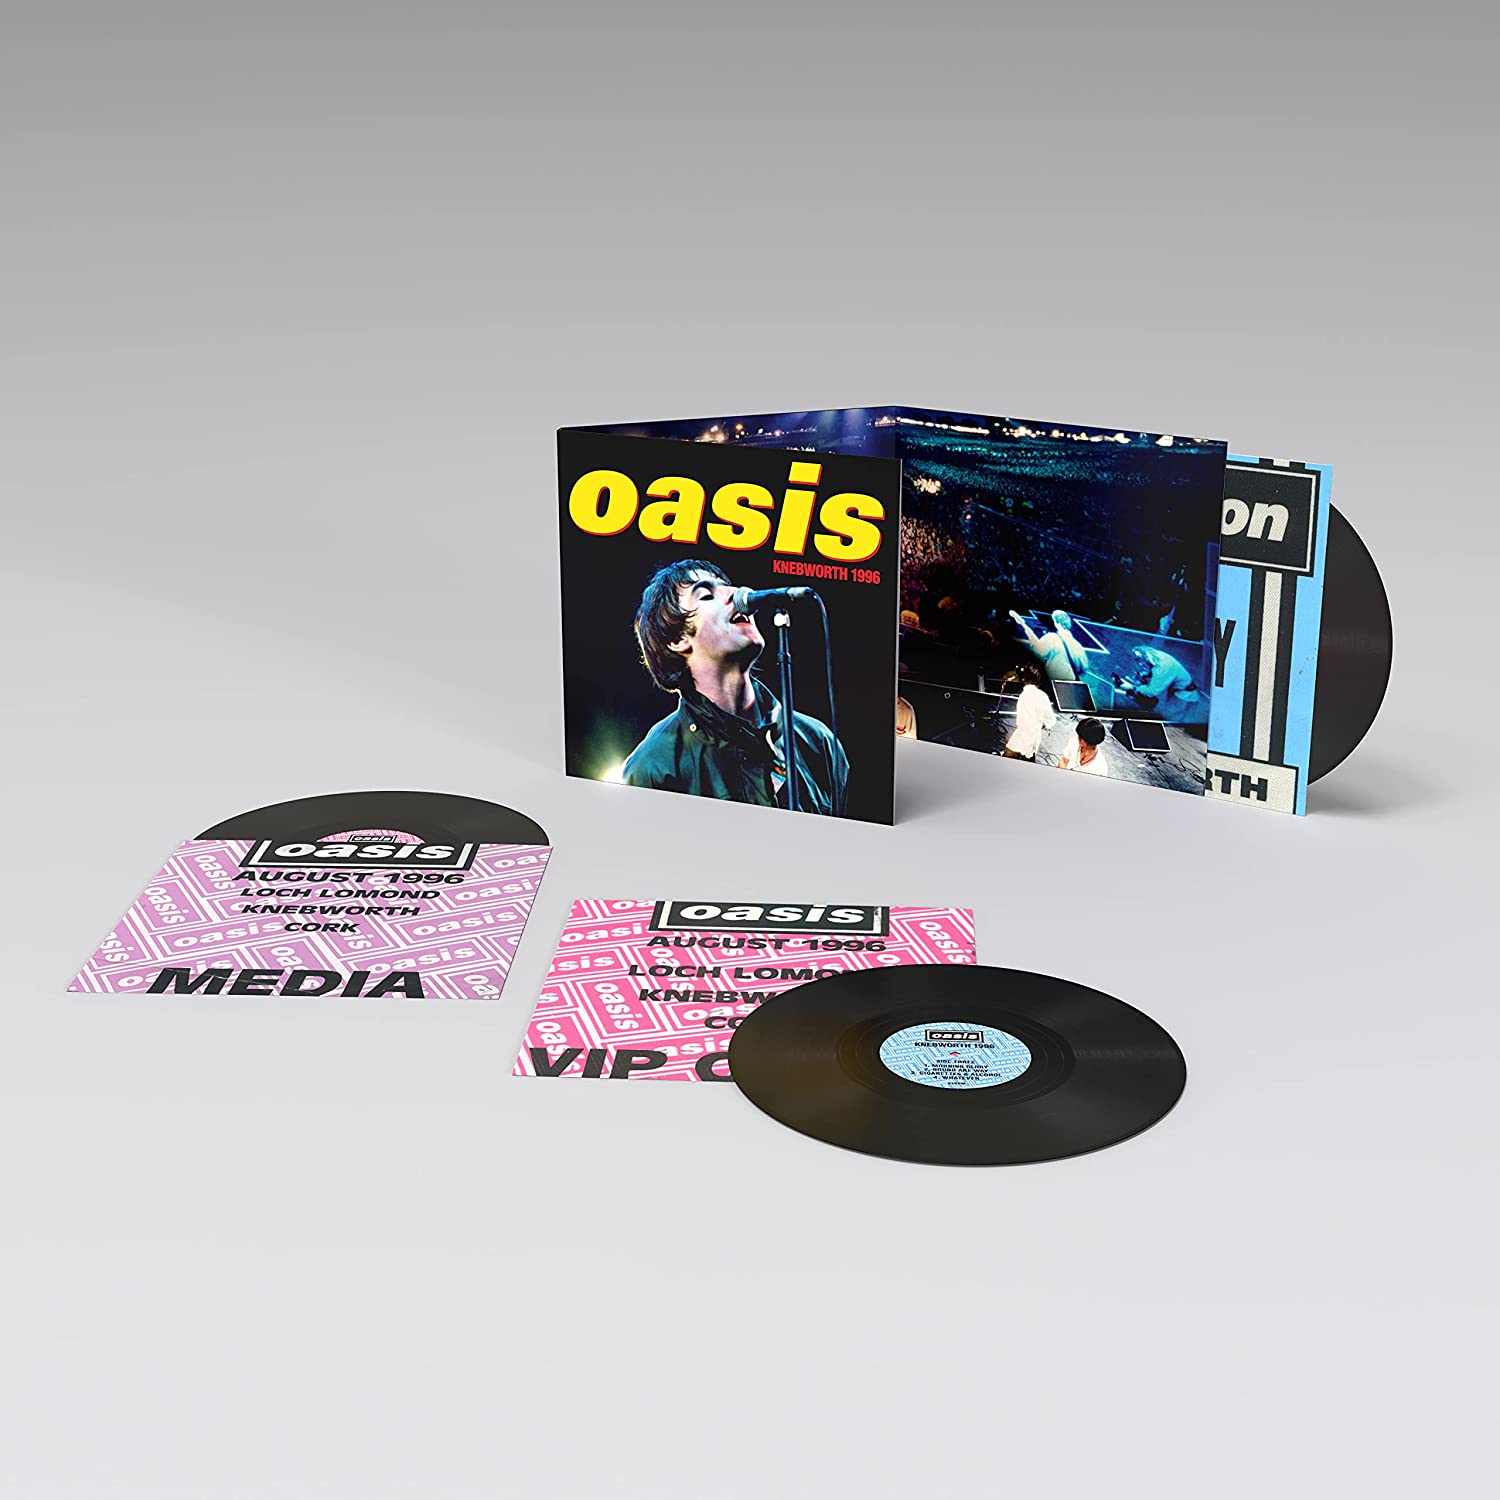 Oasis - Knebworth 96 - 3 x VINYL LP SET